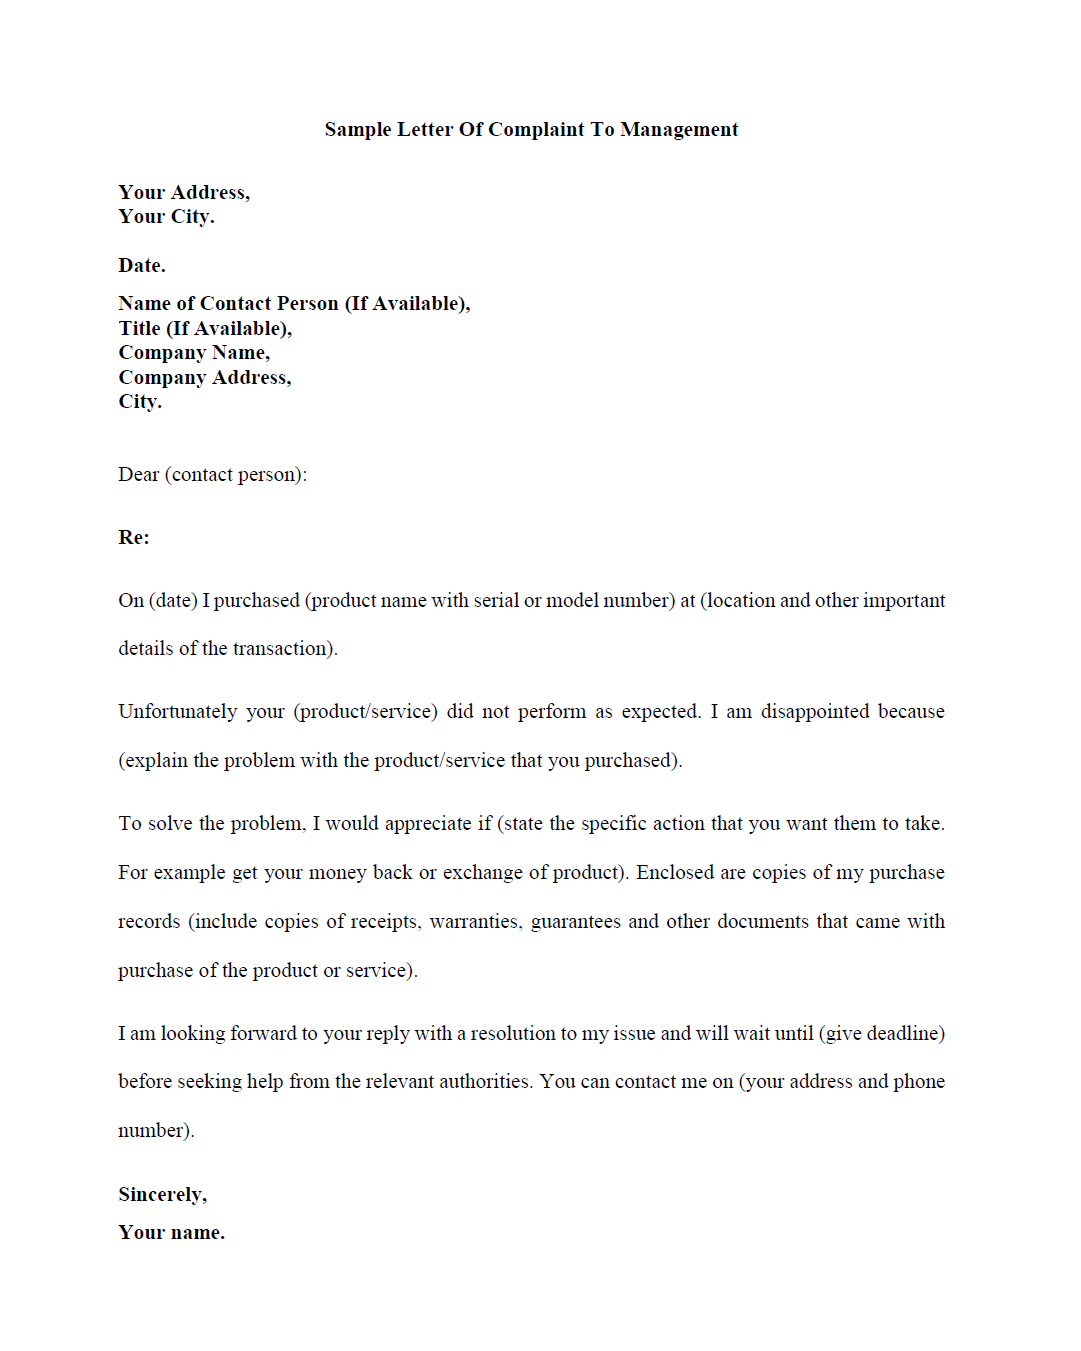 Complaint Letter Example: Sample Letter Of Complaint To Management